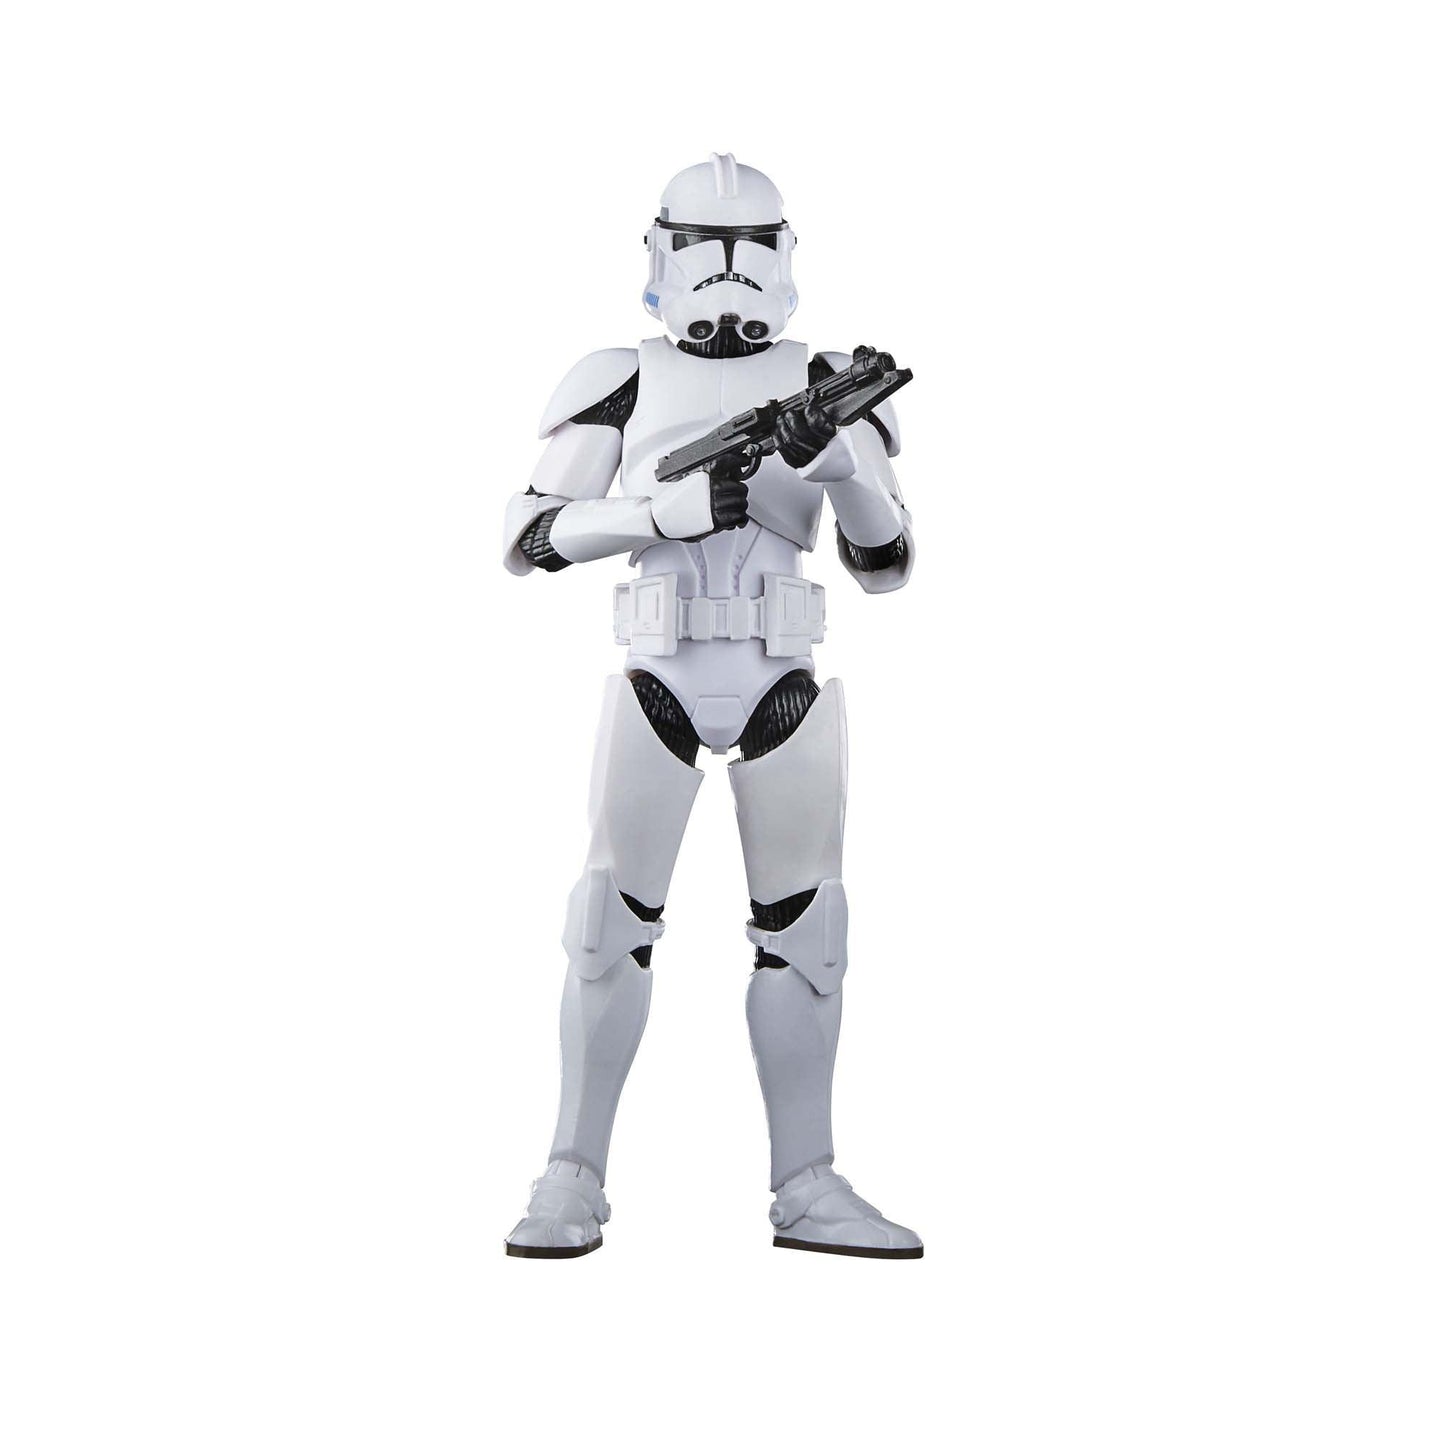 Star Wars Black Label cw phase ii clone trooper af